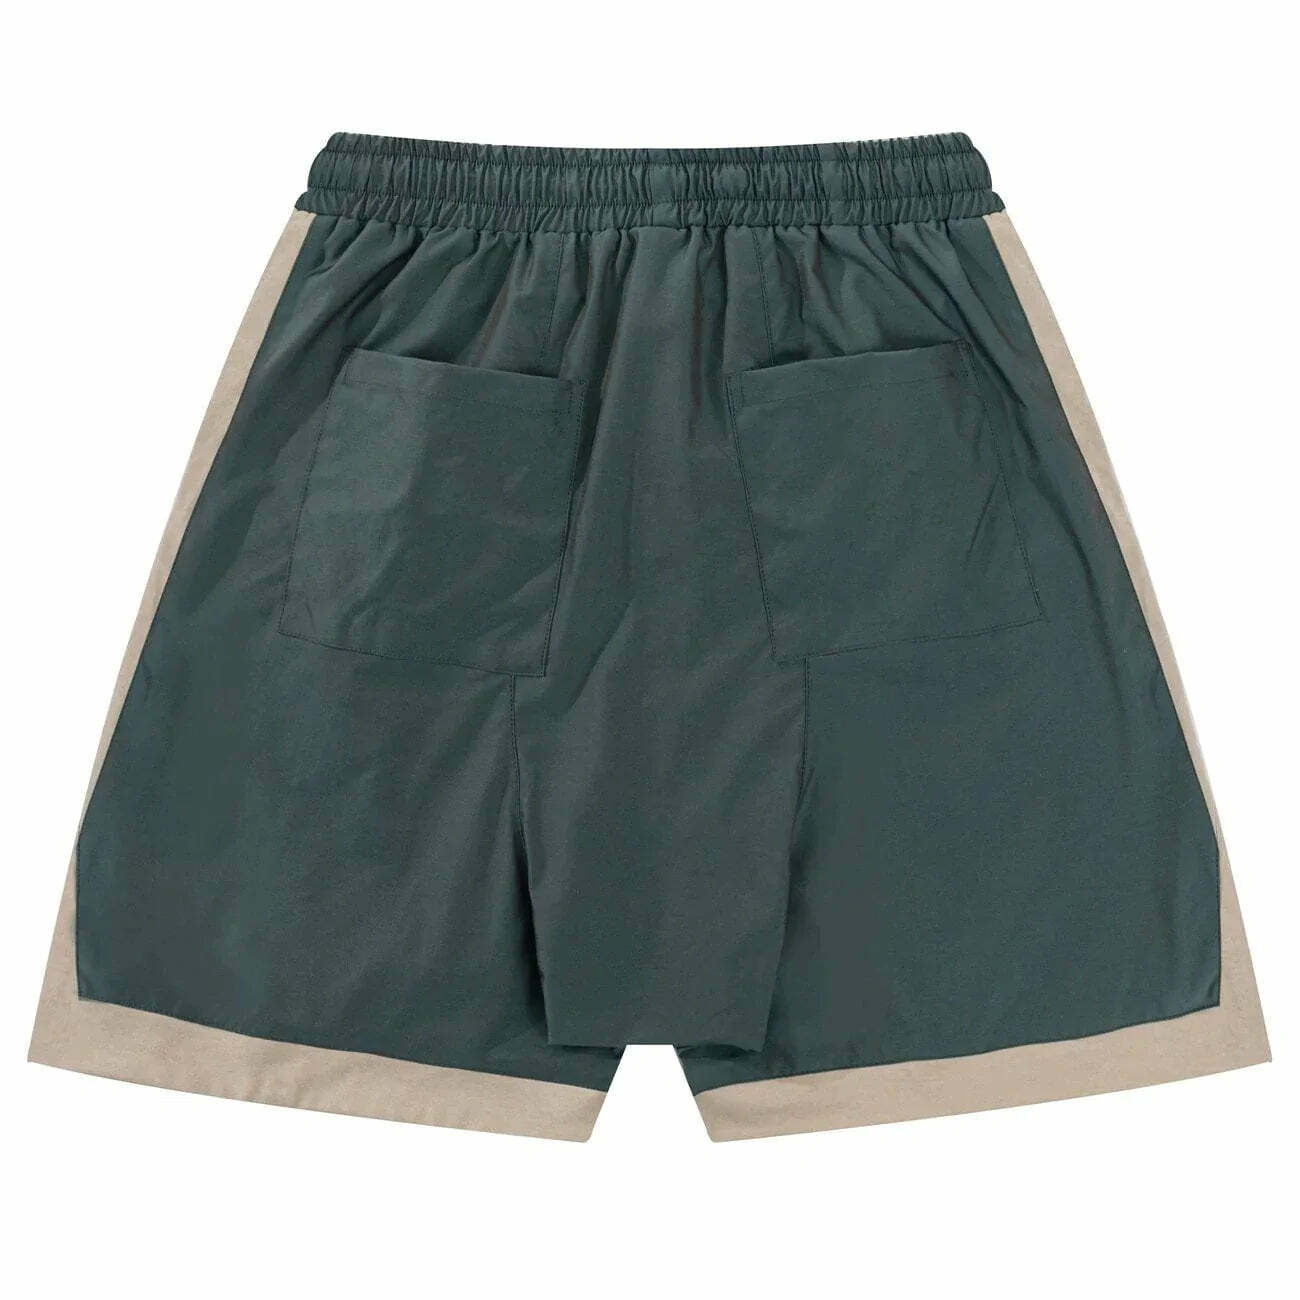 contrast panel cargo shorts edgy & urban streetwear 3309